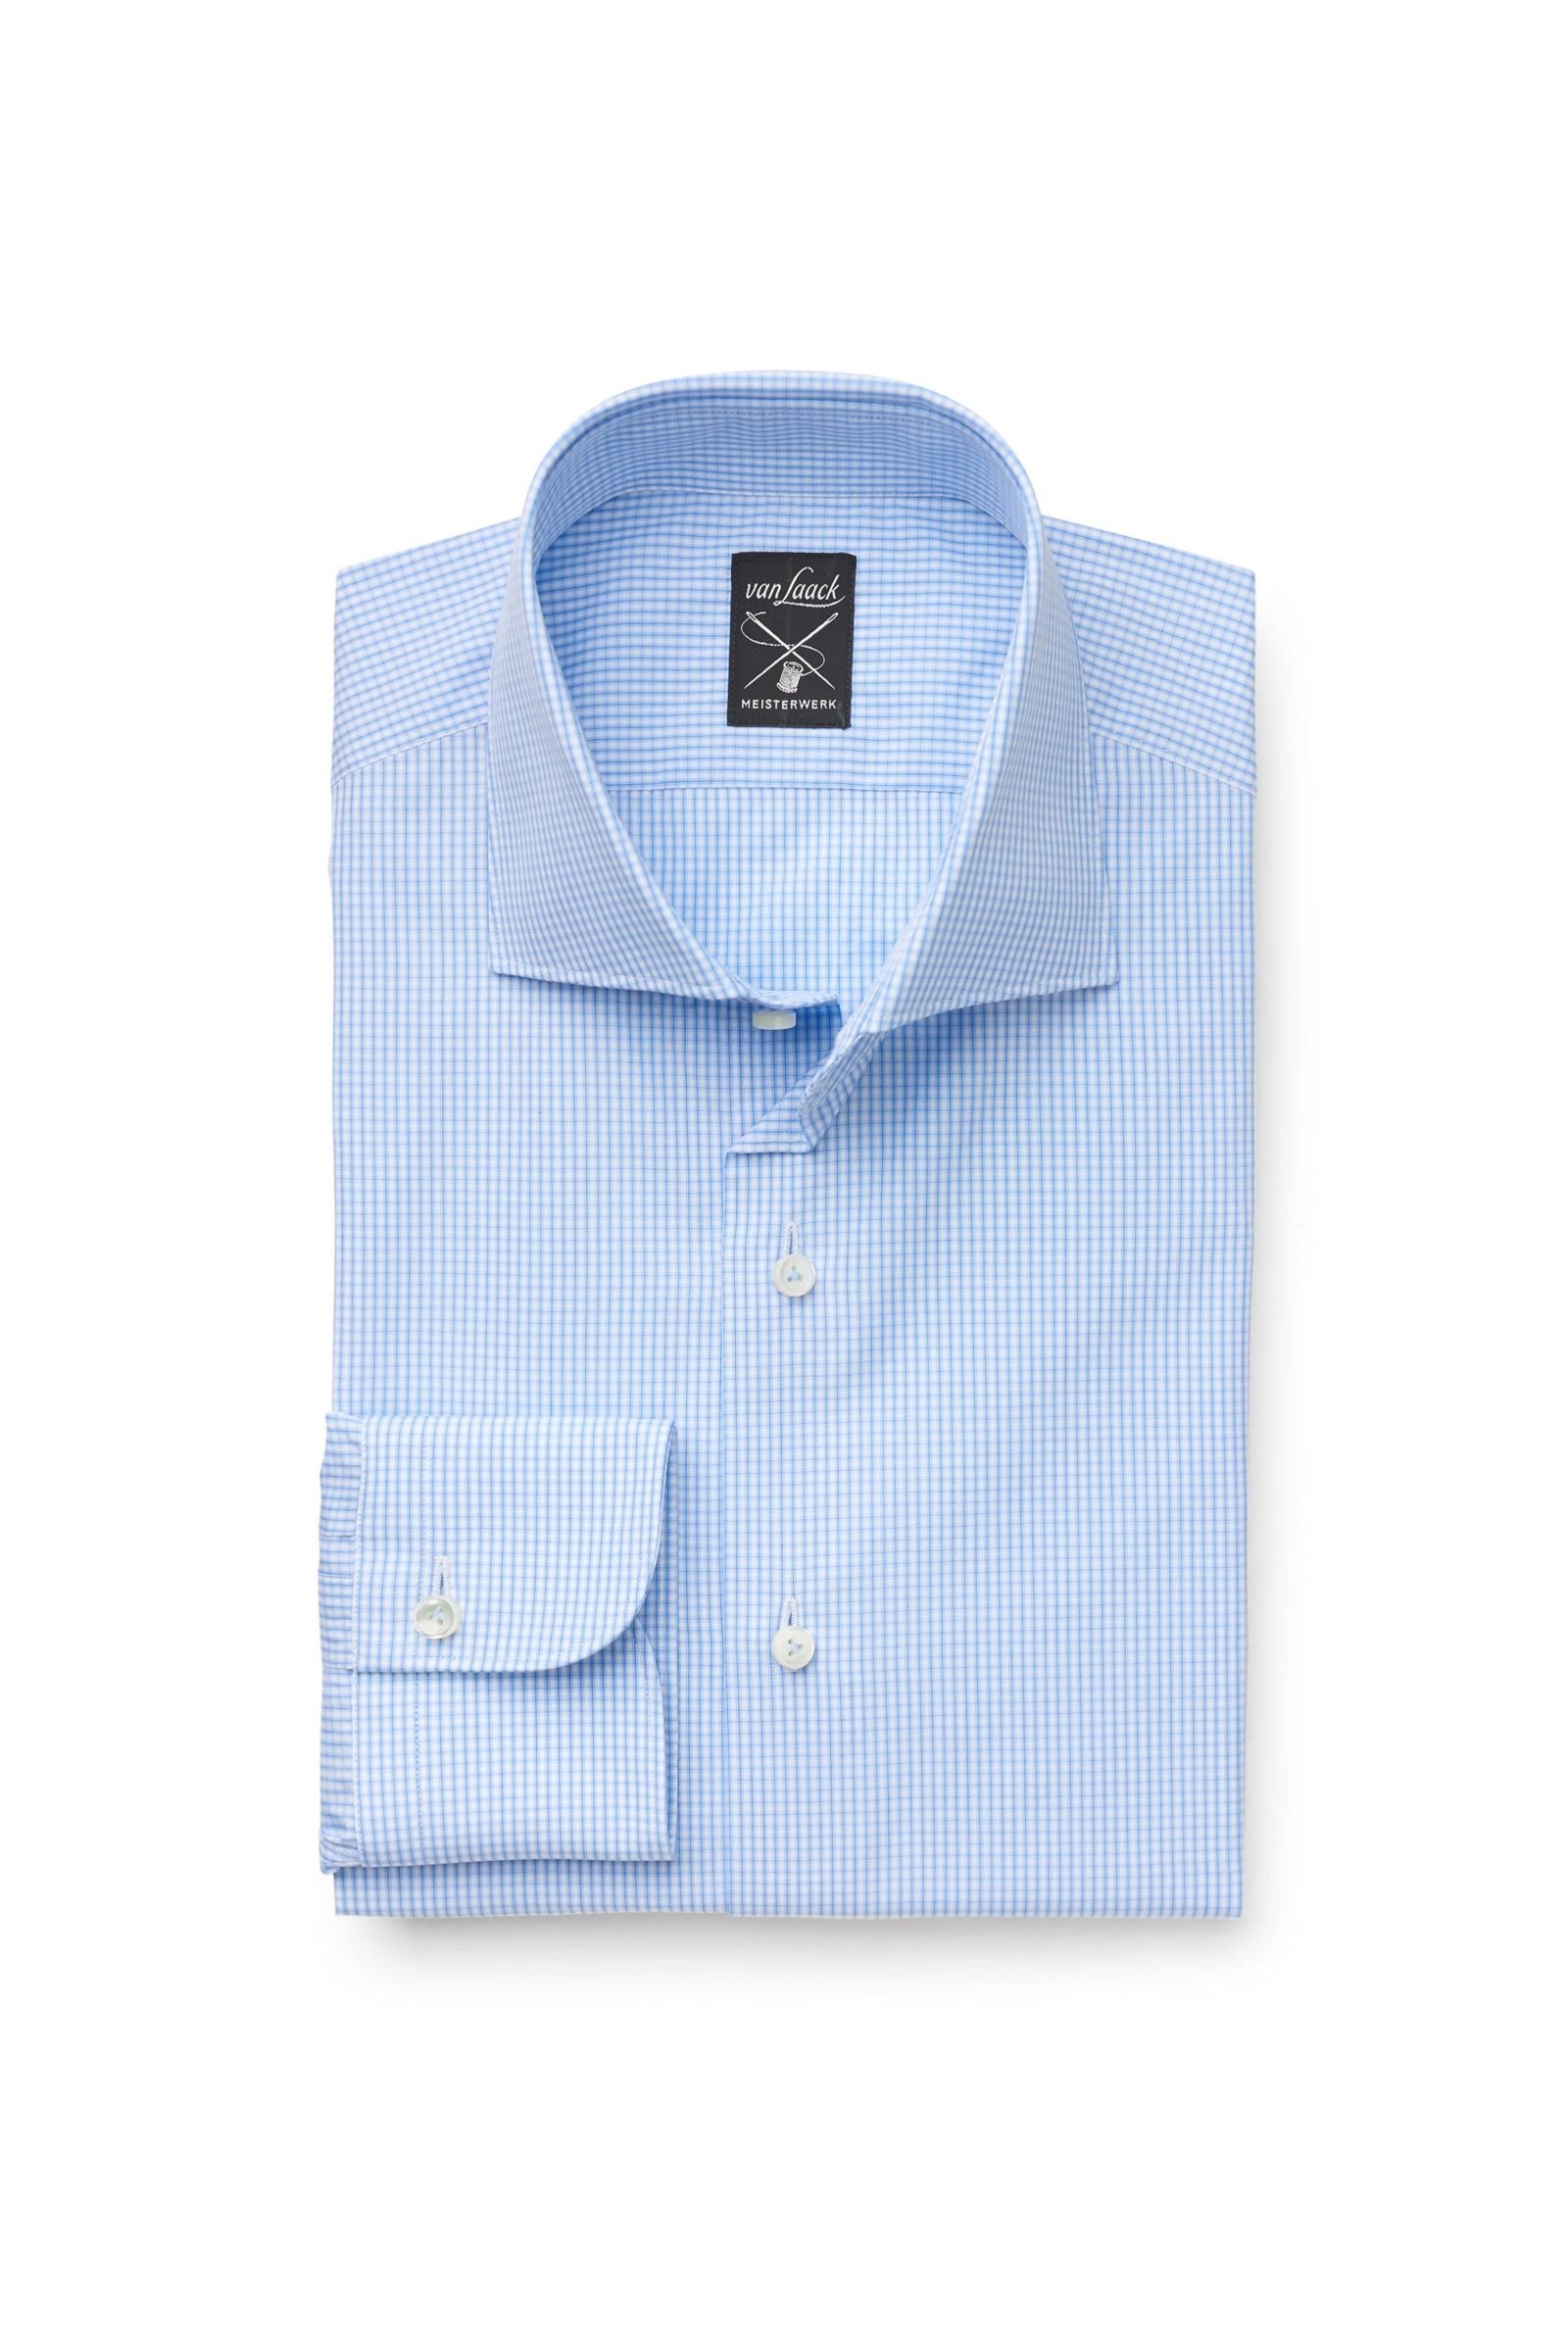 Business shirt 'Mivara Tailor Fit' shark collar light blue/white checked